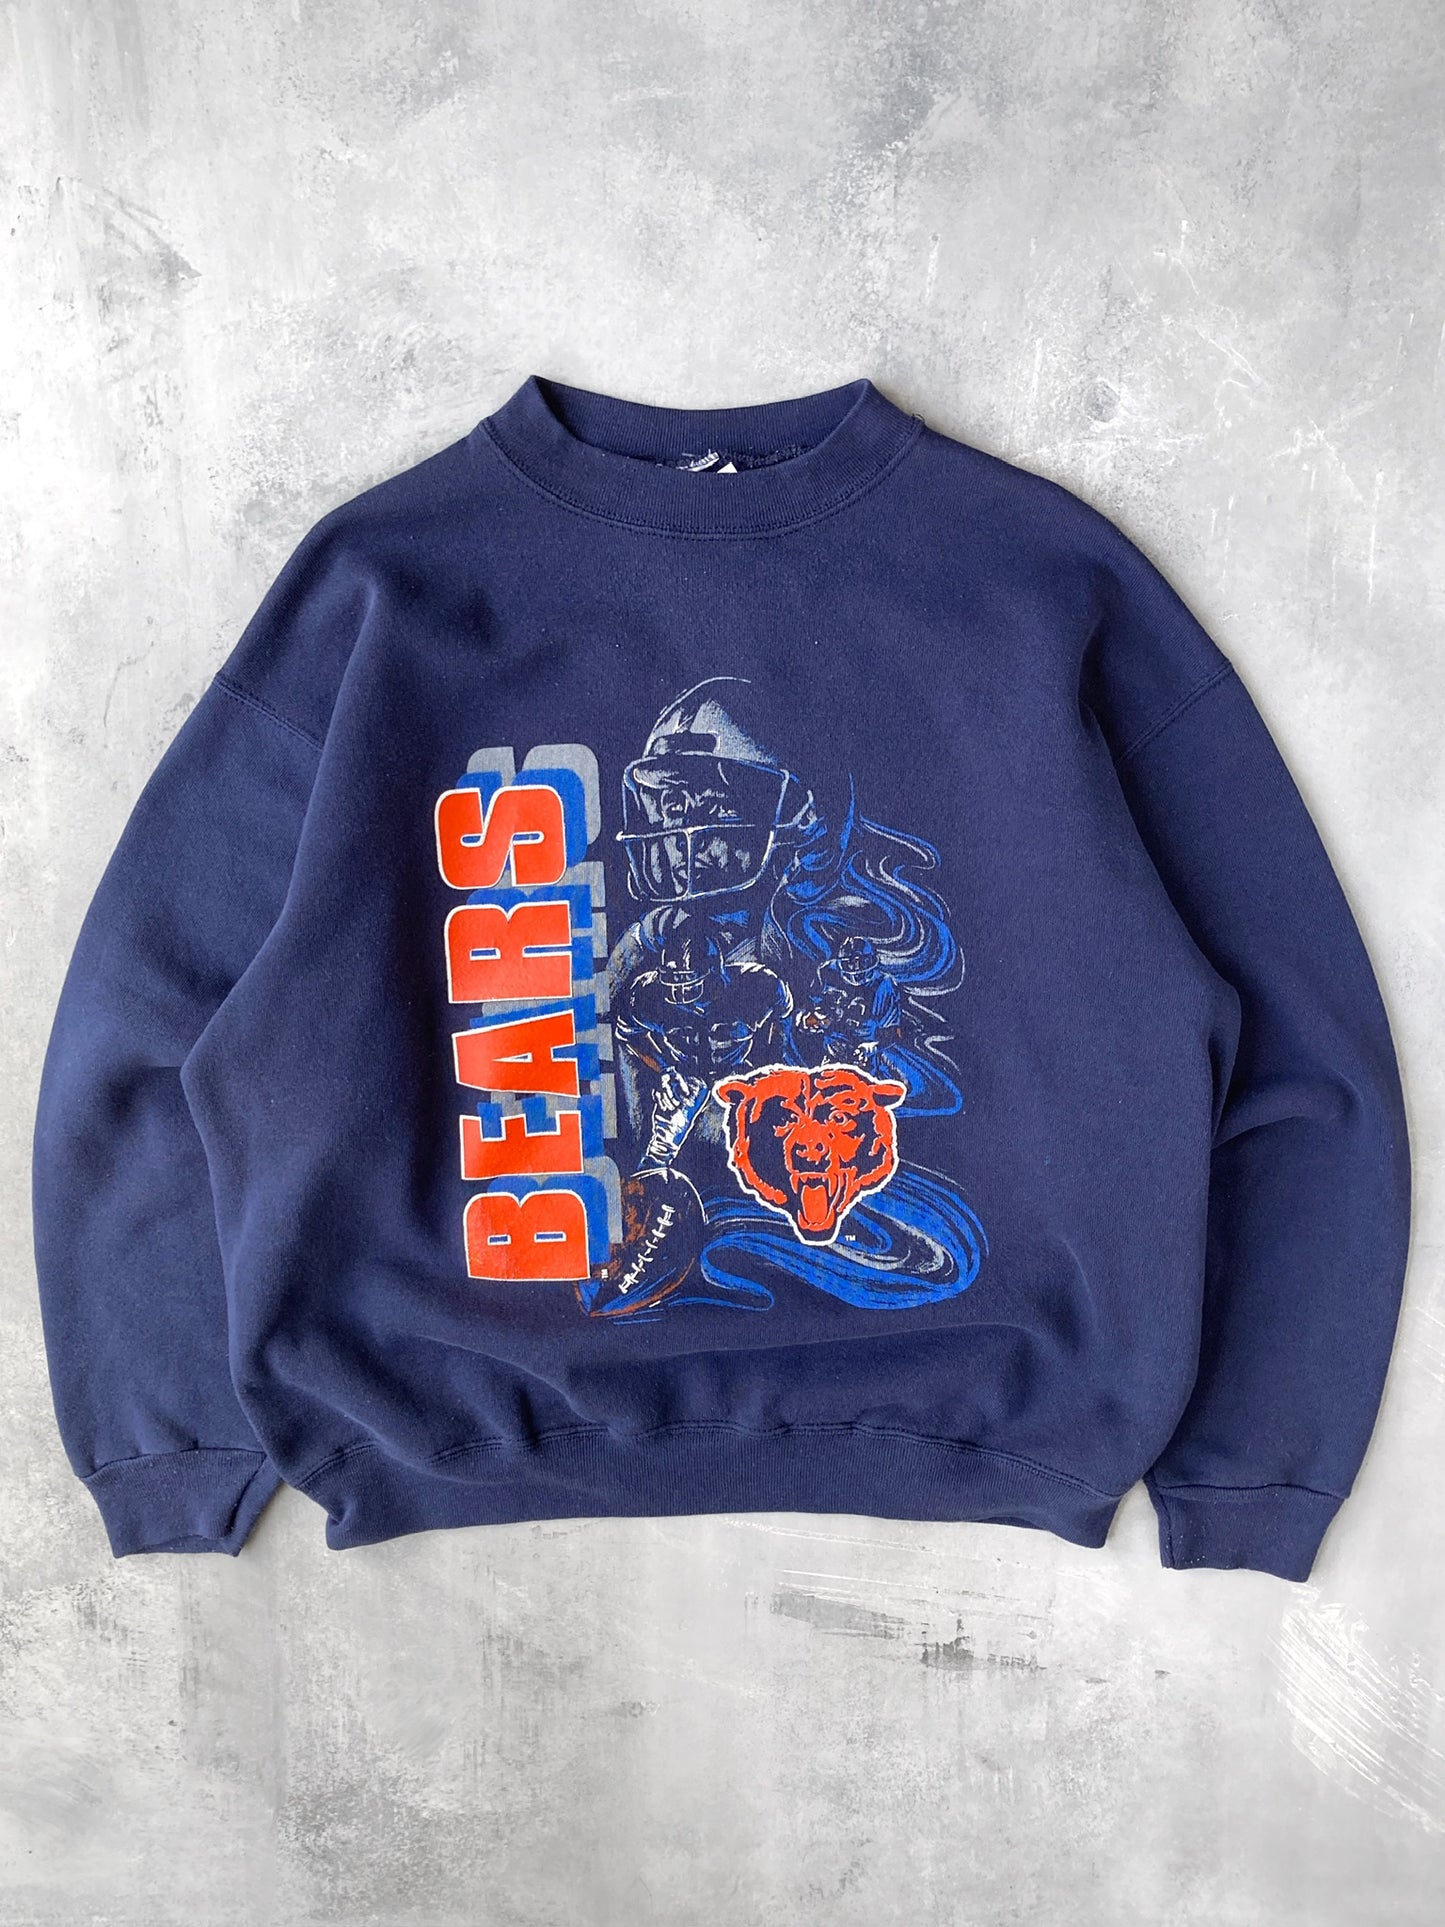 Chicago Bears Sweatshirt 90's - Medium / Large